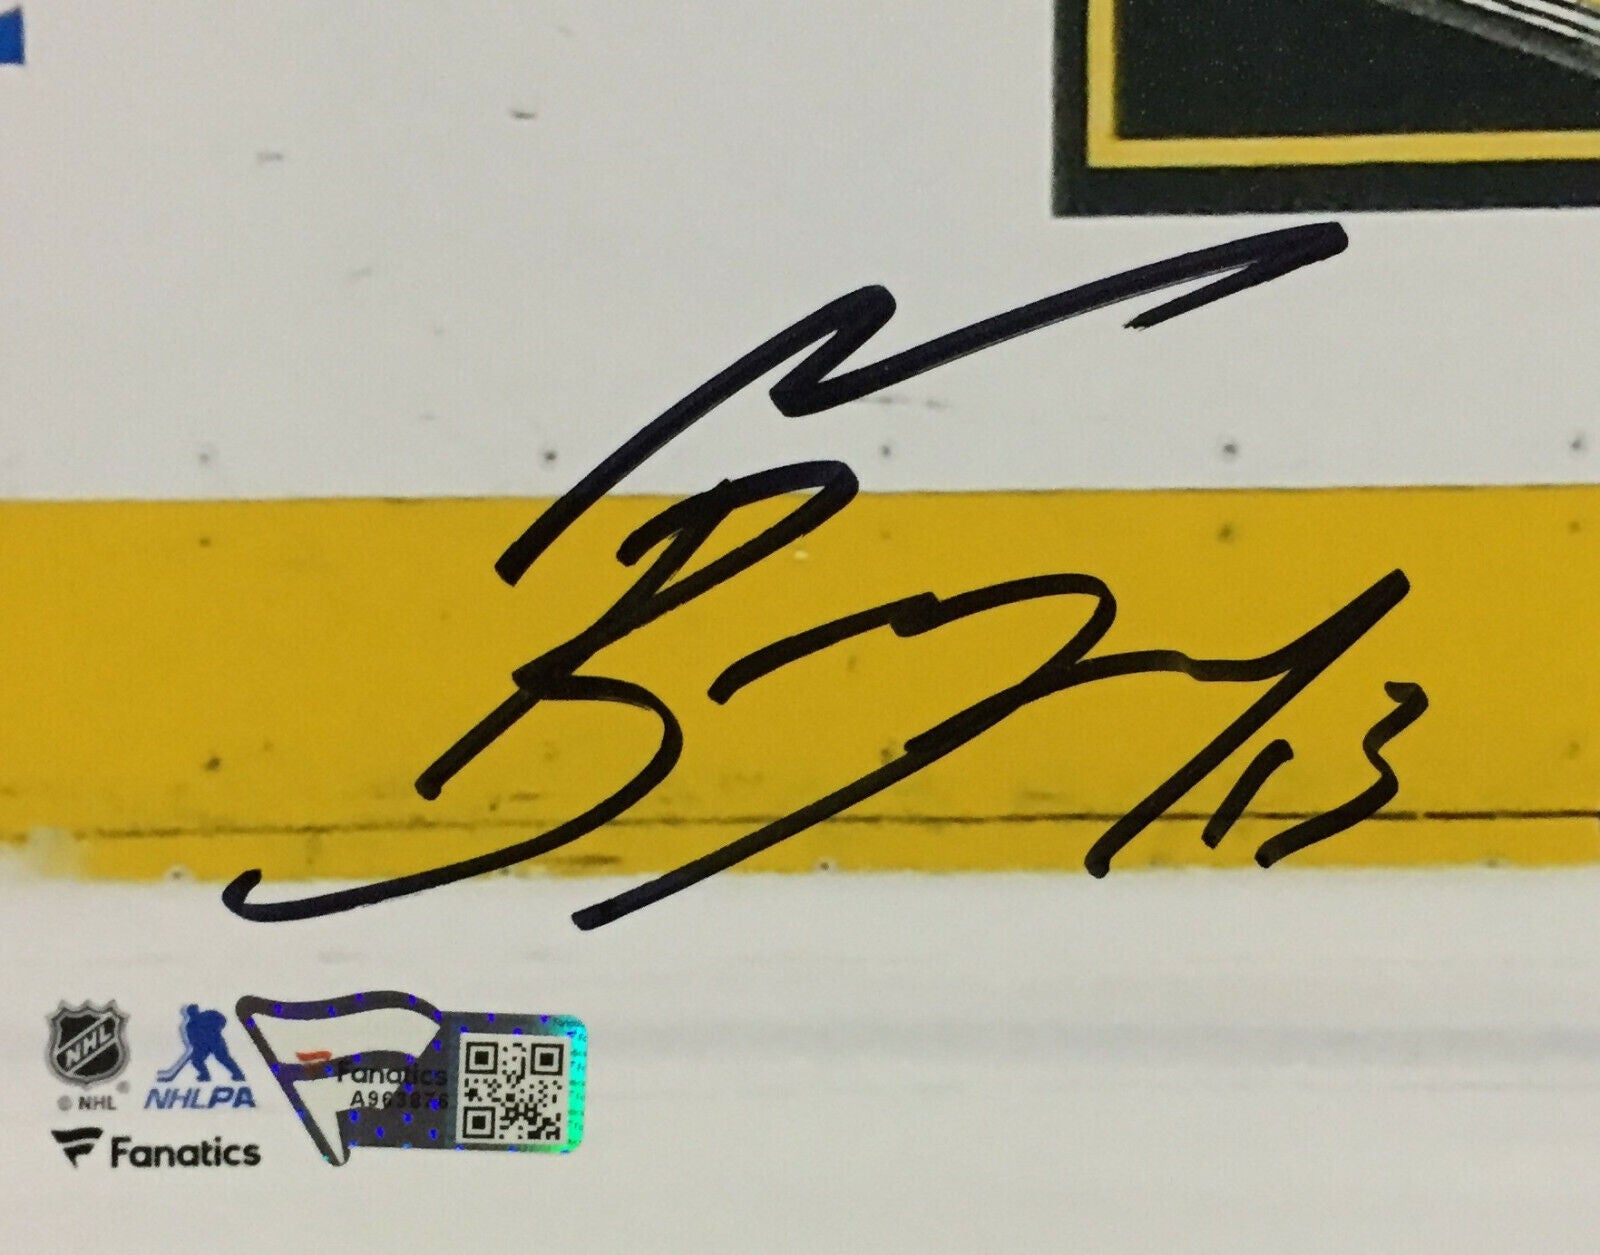 Official Mathew Barzal 13 New York Islanders Autographed signature